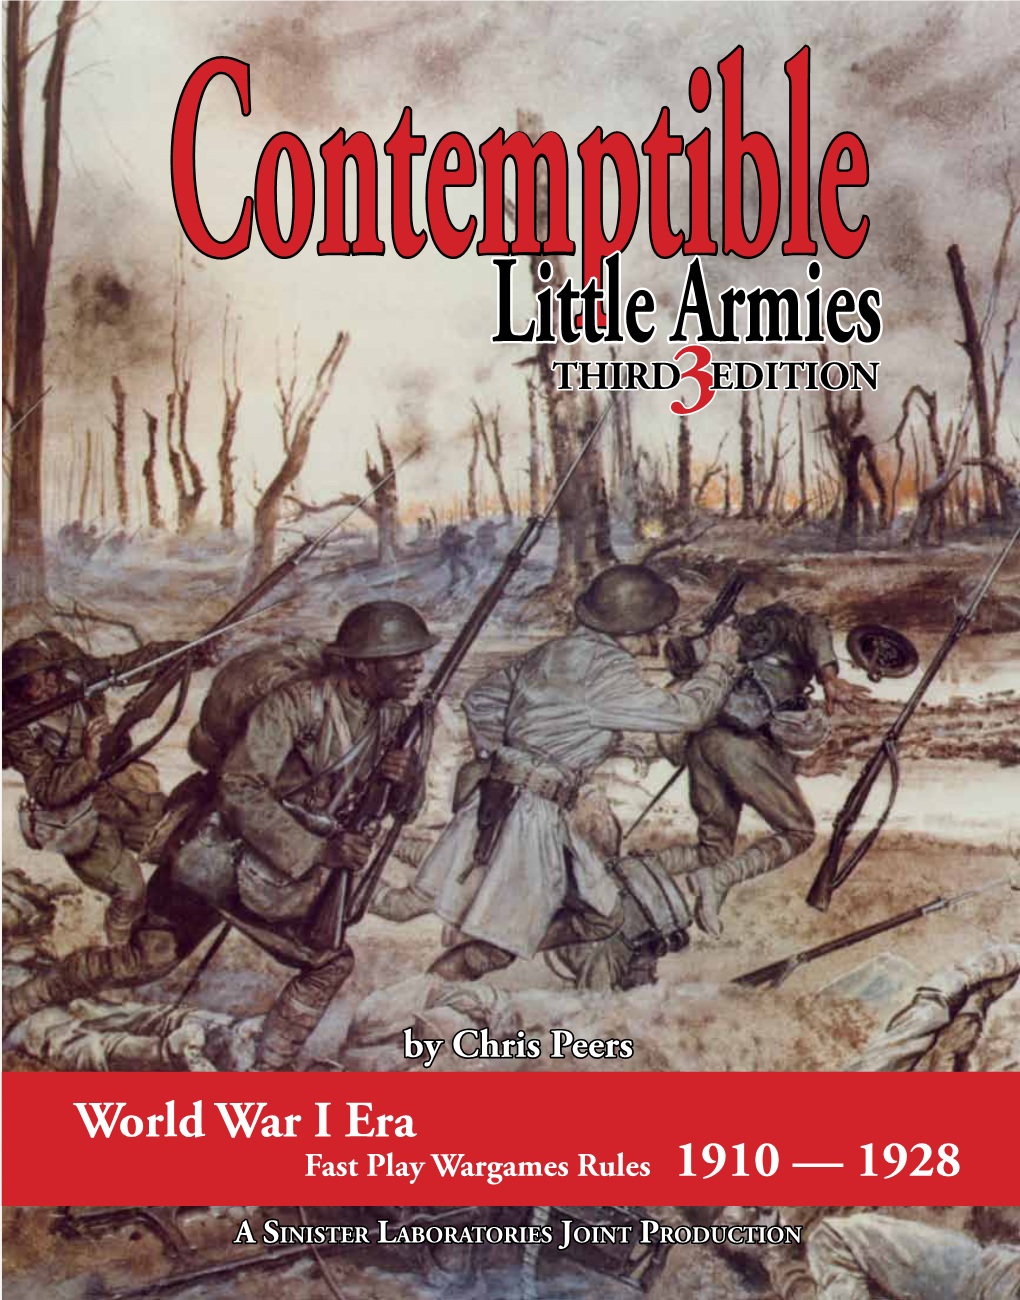 World War I Era Fast Play Wargames Rules 1910 — 1928